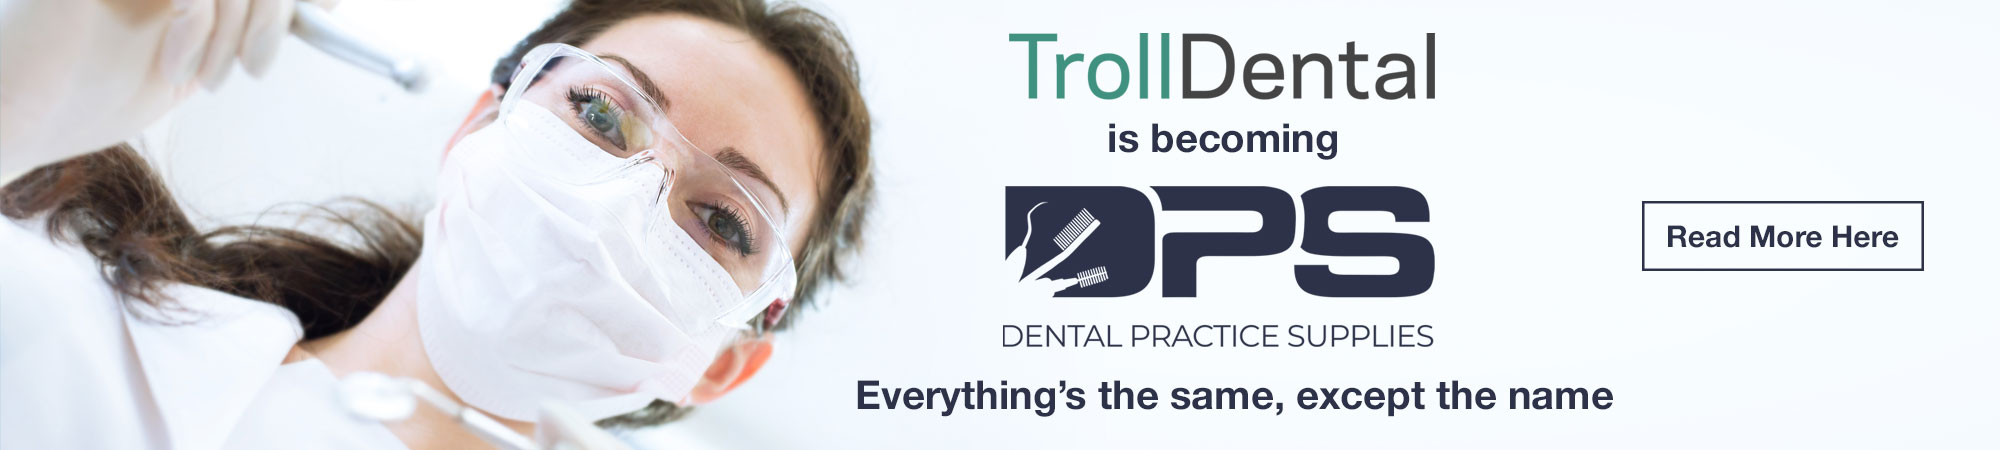 dps-troll-banner